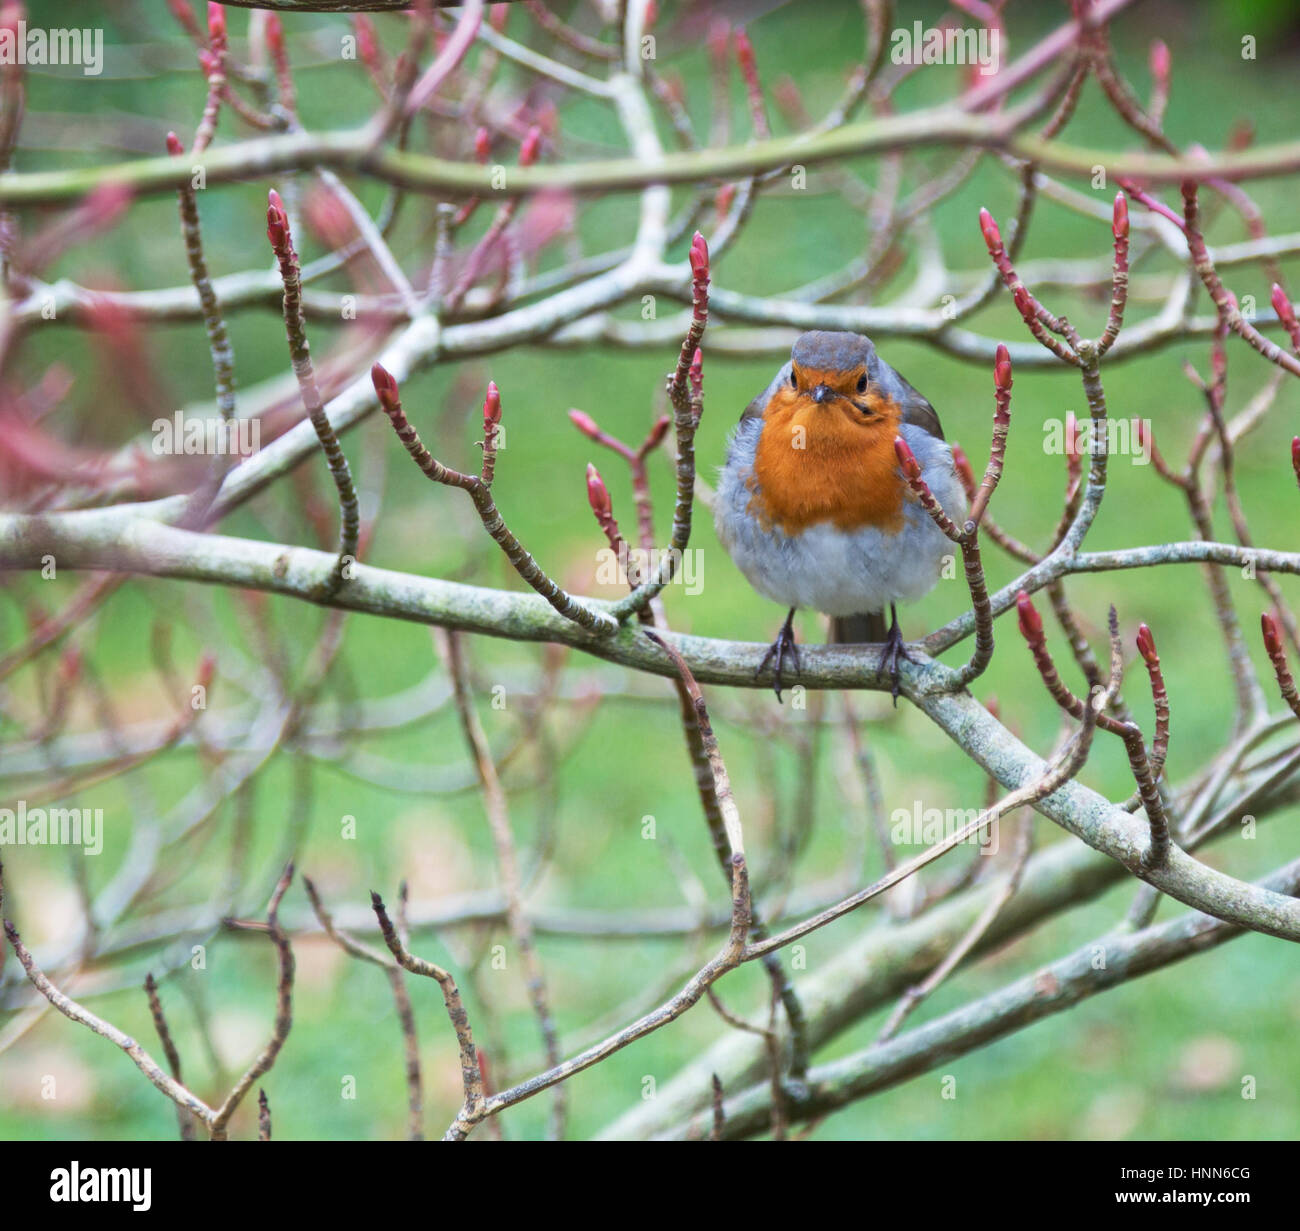 A lone robin perched on a budding bush Stock Photo